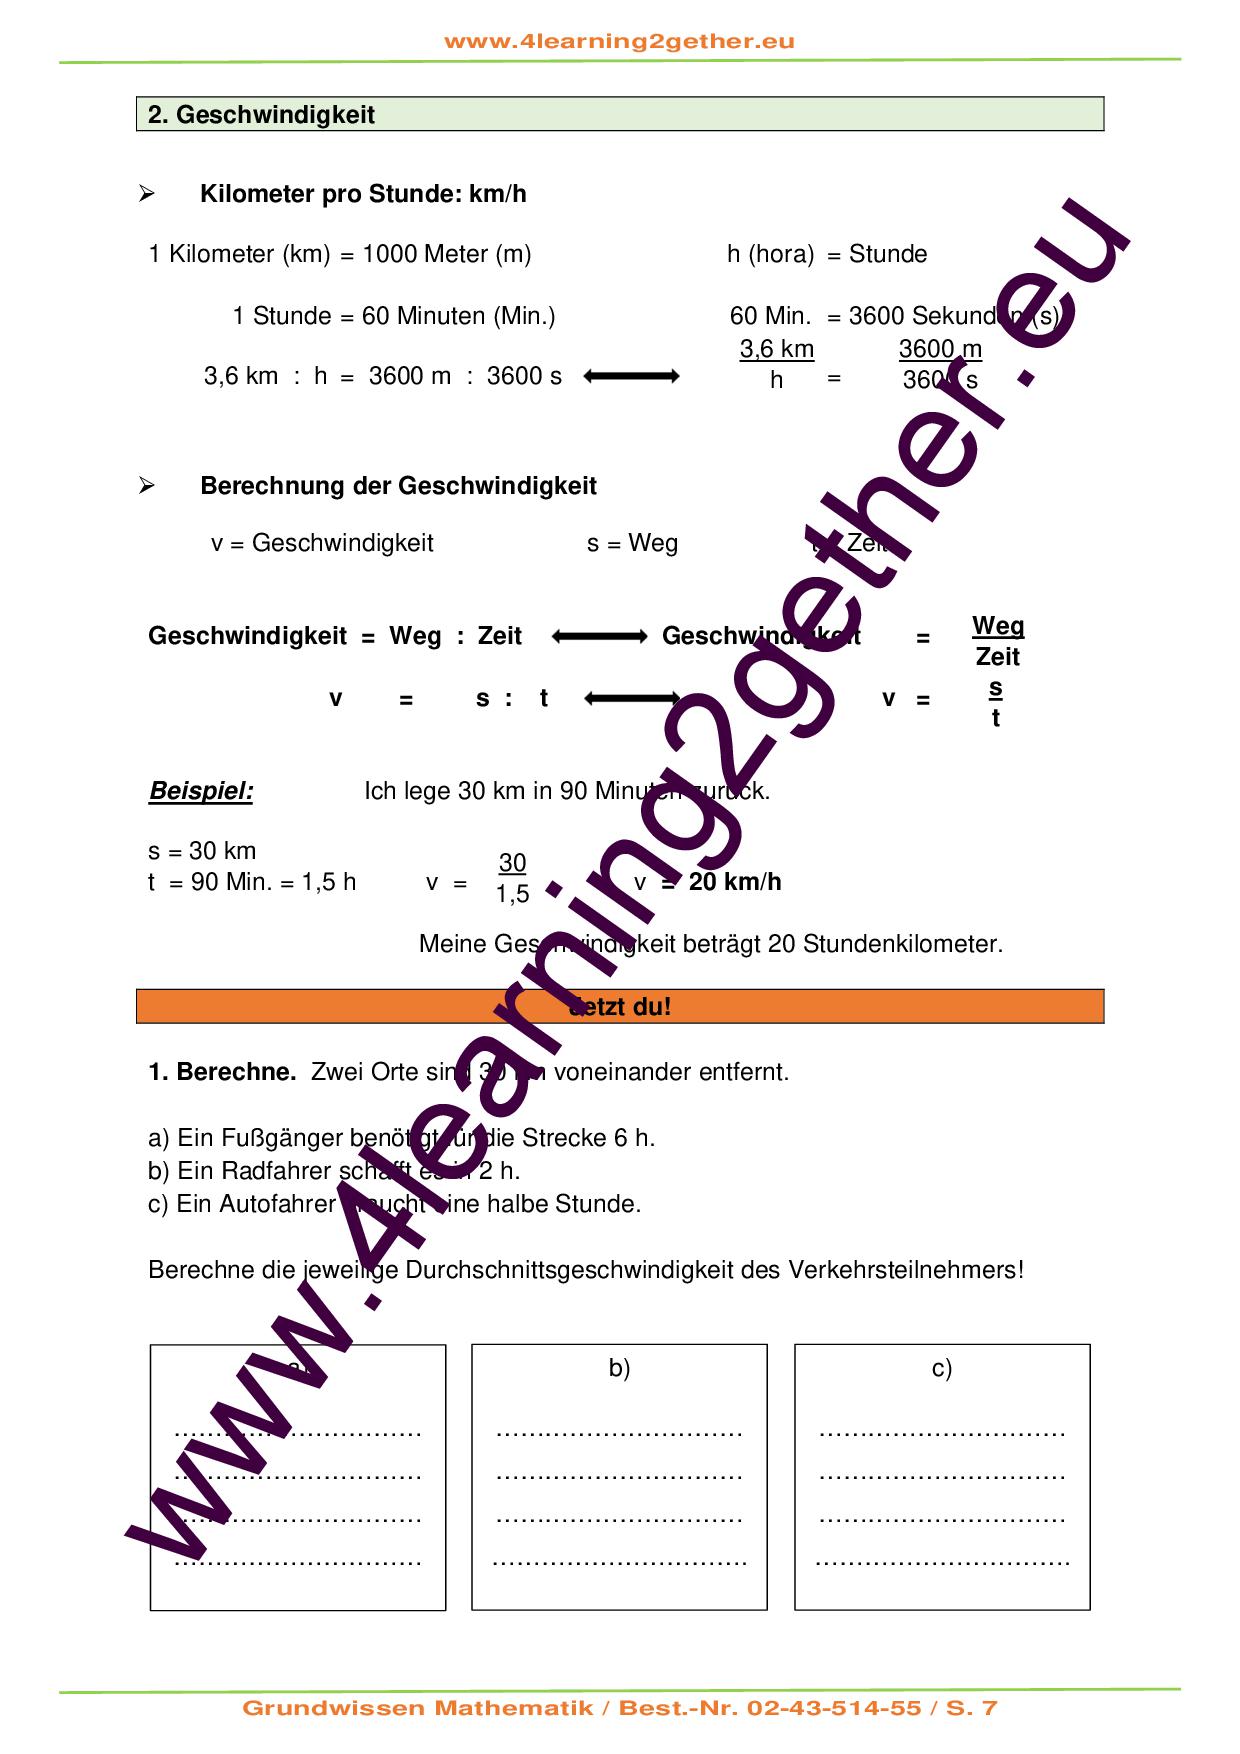 Grundwissen Mathematik / bearb. Word & PDF / ab 9 J. 